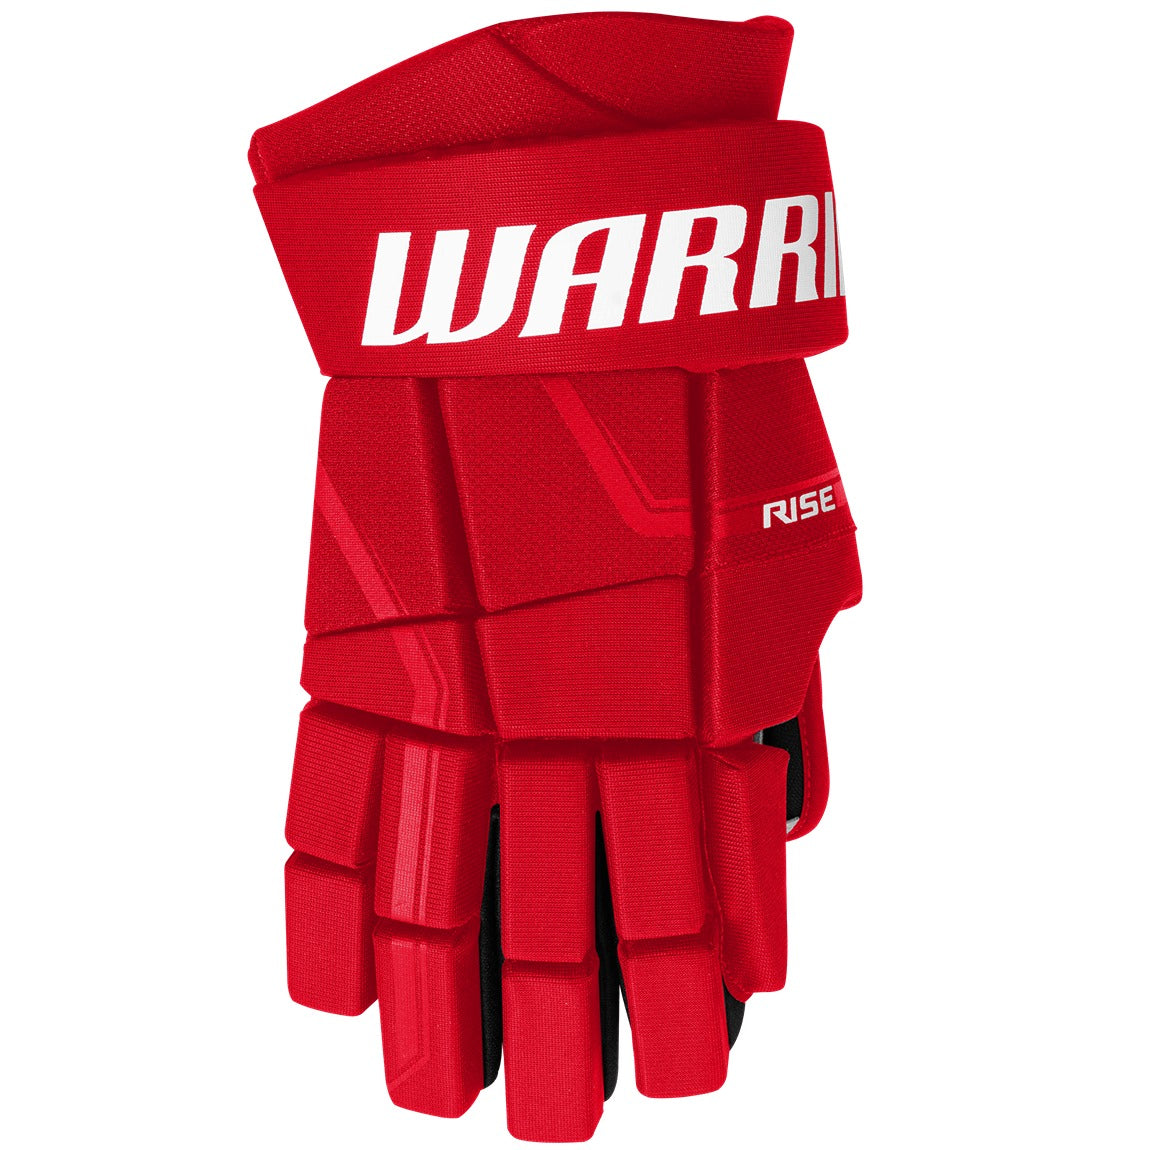 Warrior Rise Hockey Gloves - Senior